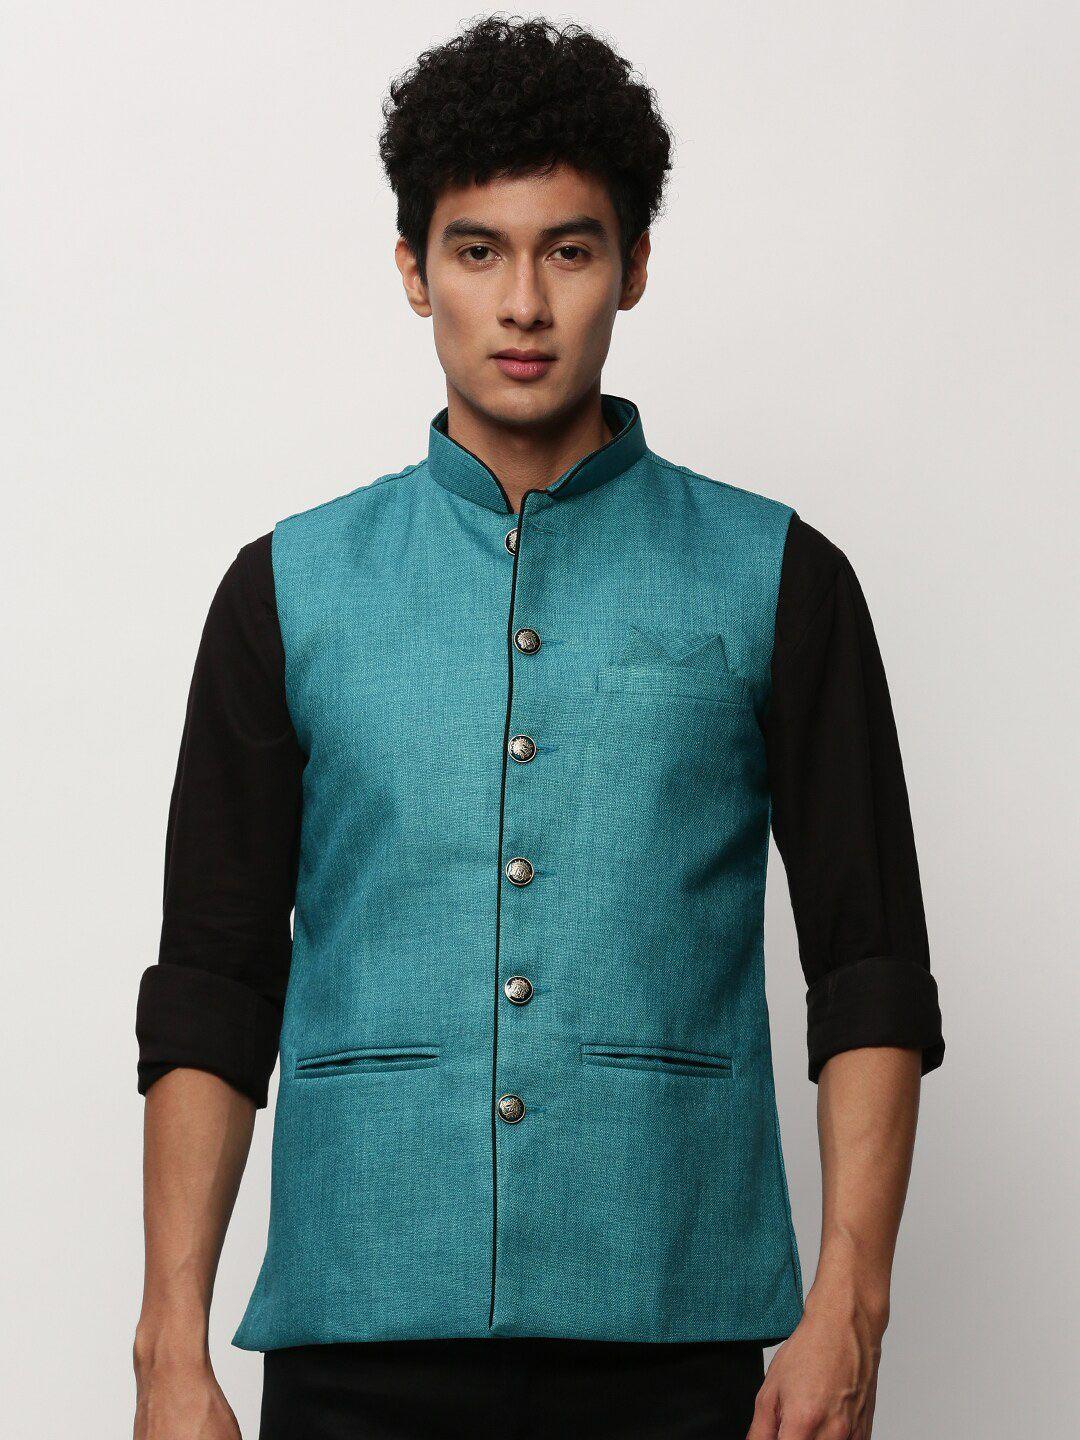 showoff-woven-jute-cotton-nehru-jackets